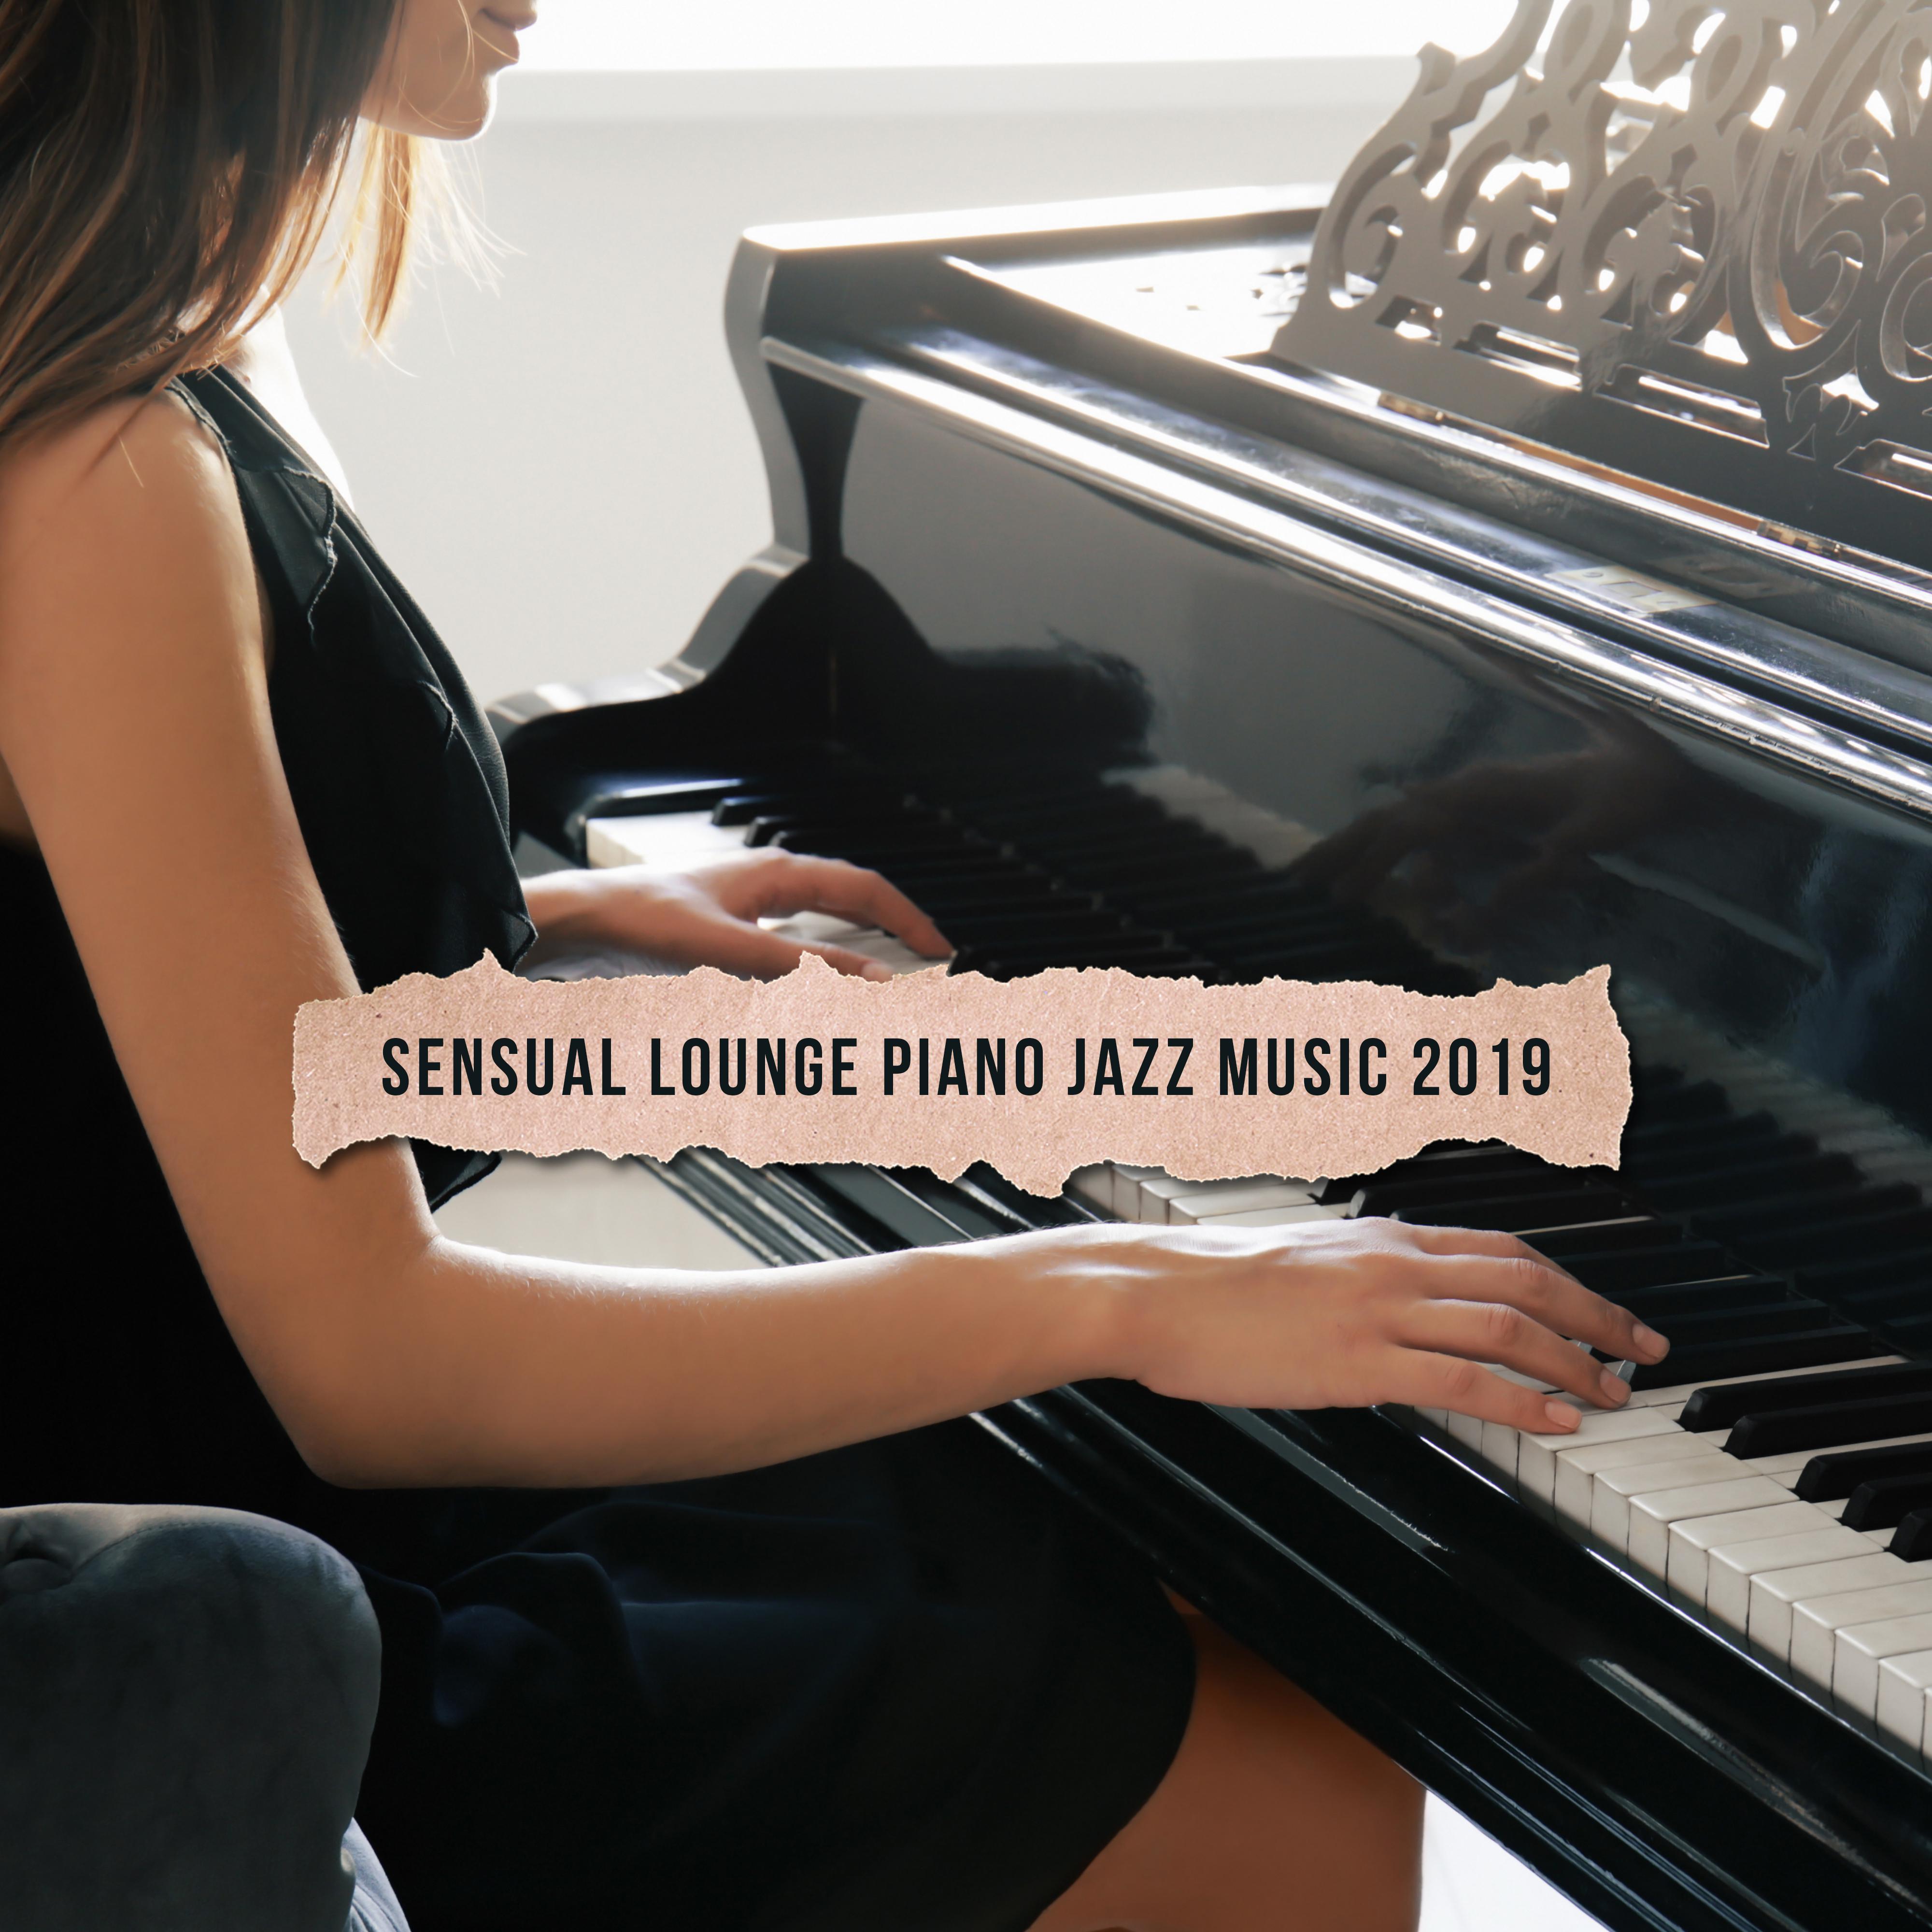 Sensual Lounge Piano Jazz Music 2019